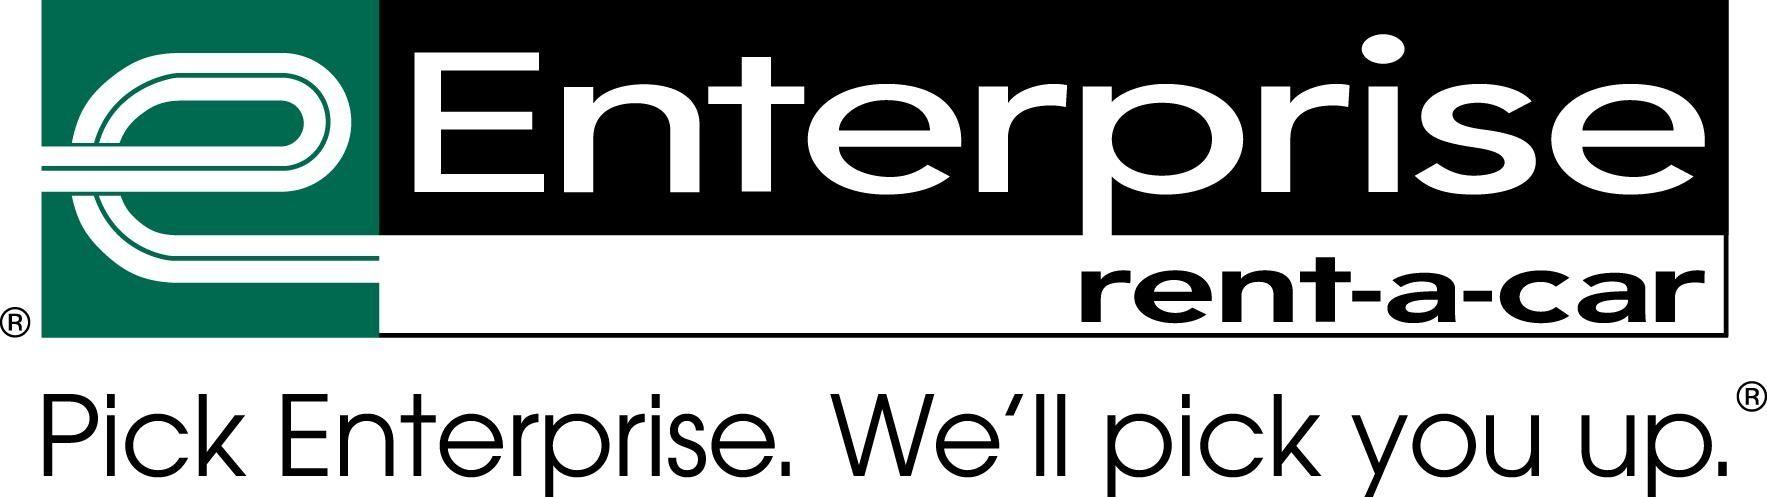 Enterprise Rent a Car Logo - Enterprise rent a car Logos